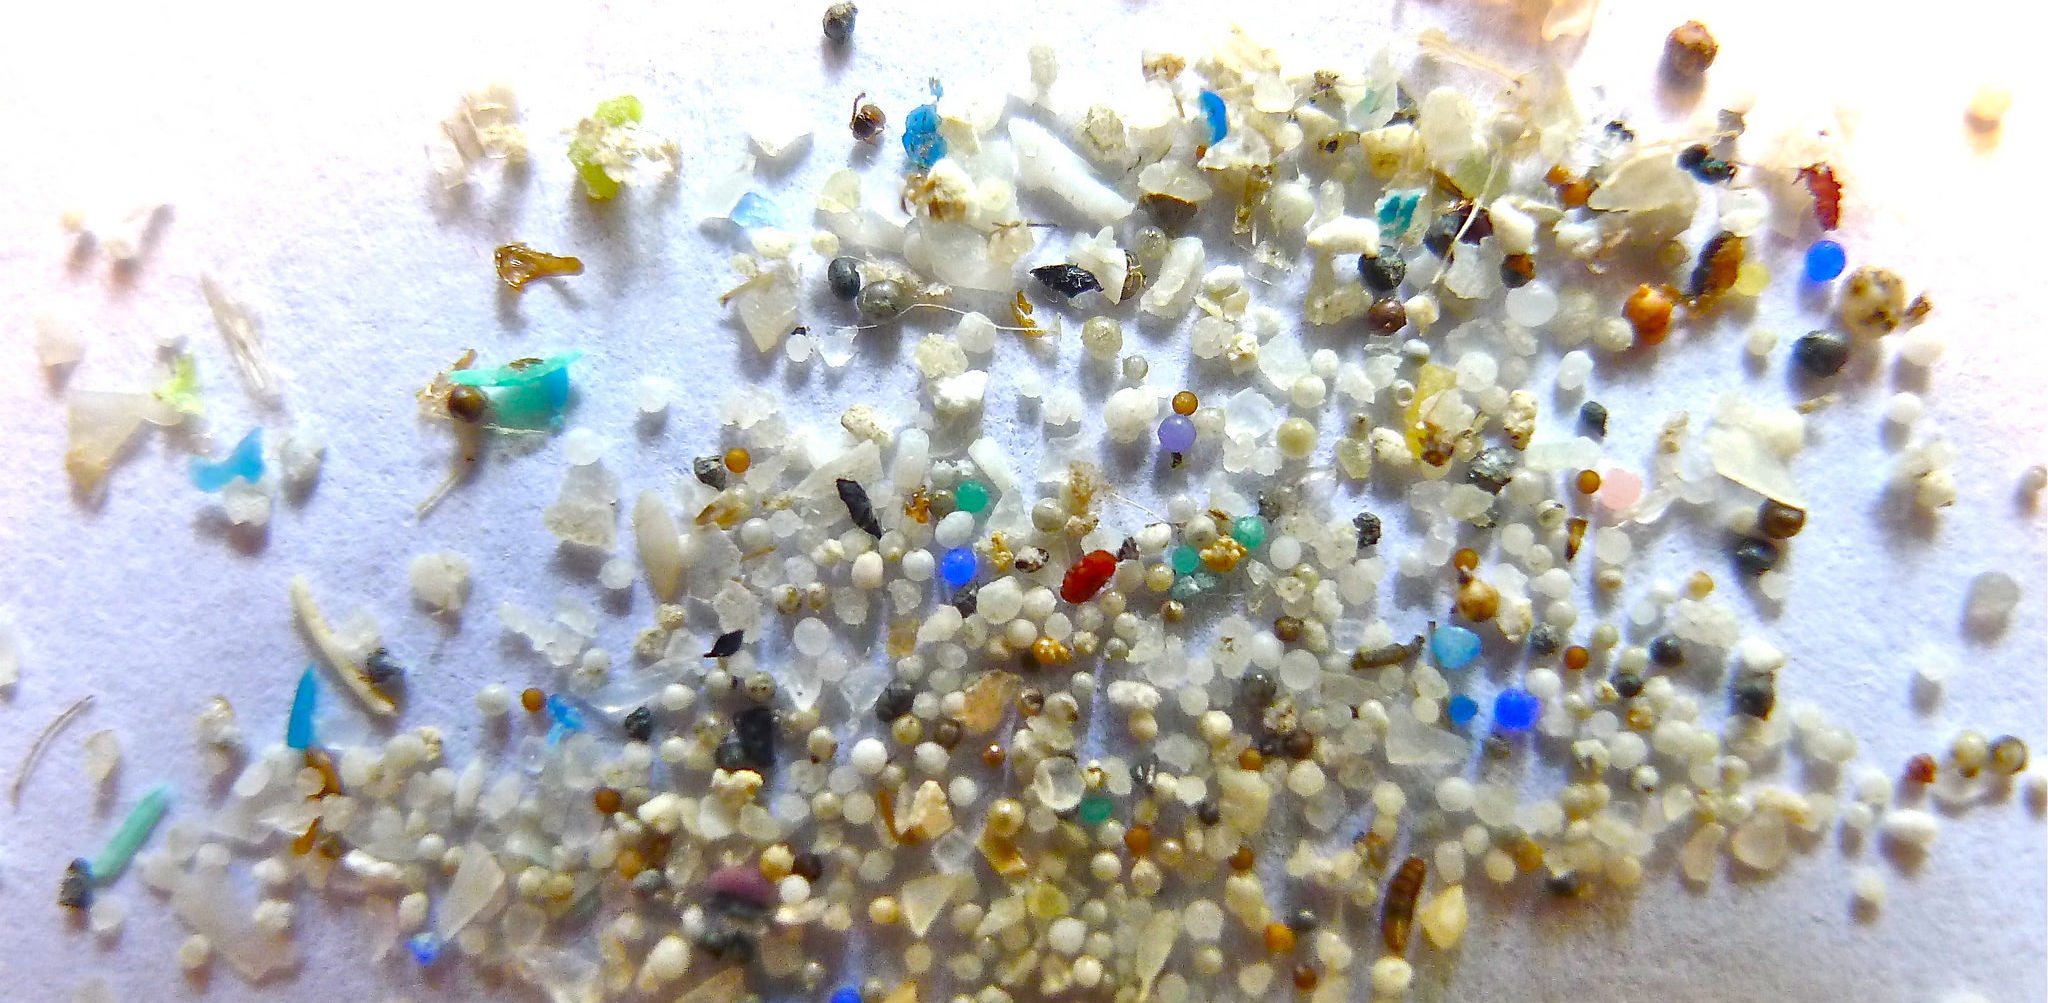 Microplastics. Photo: Oregon State University/Flickr